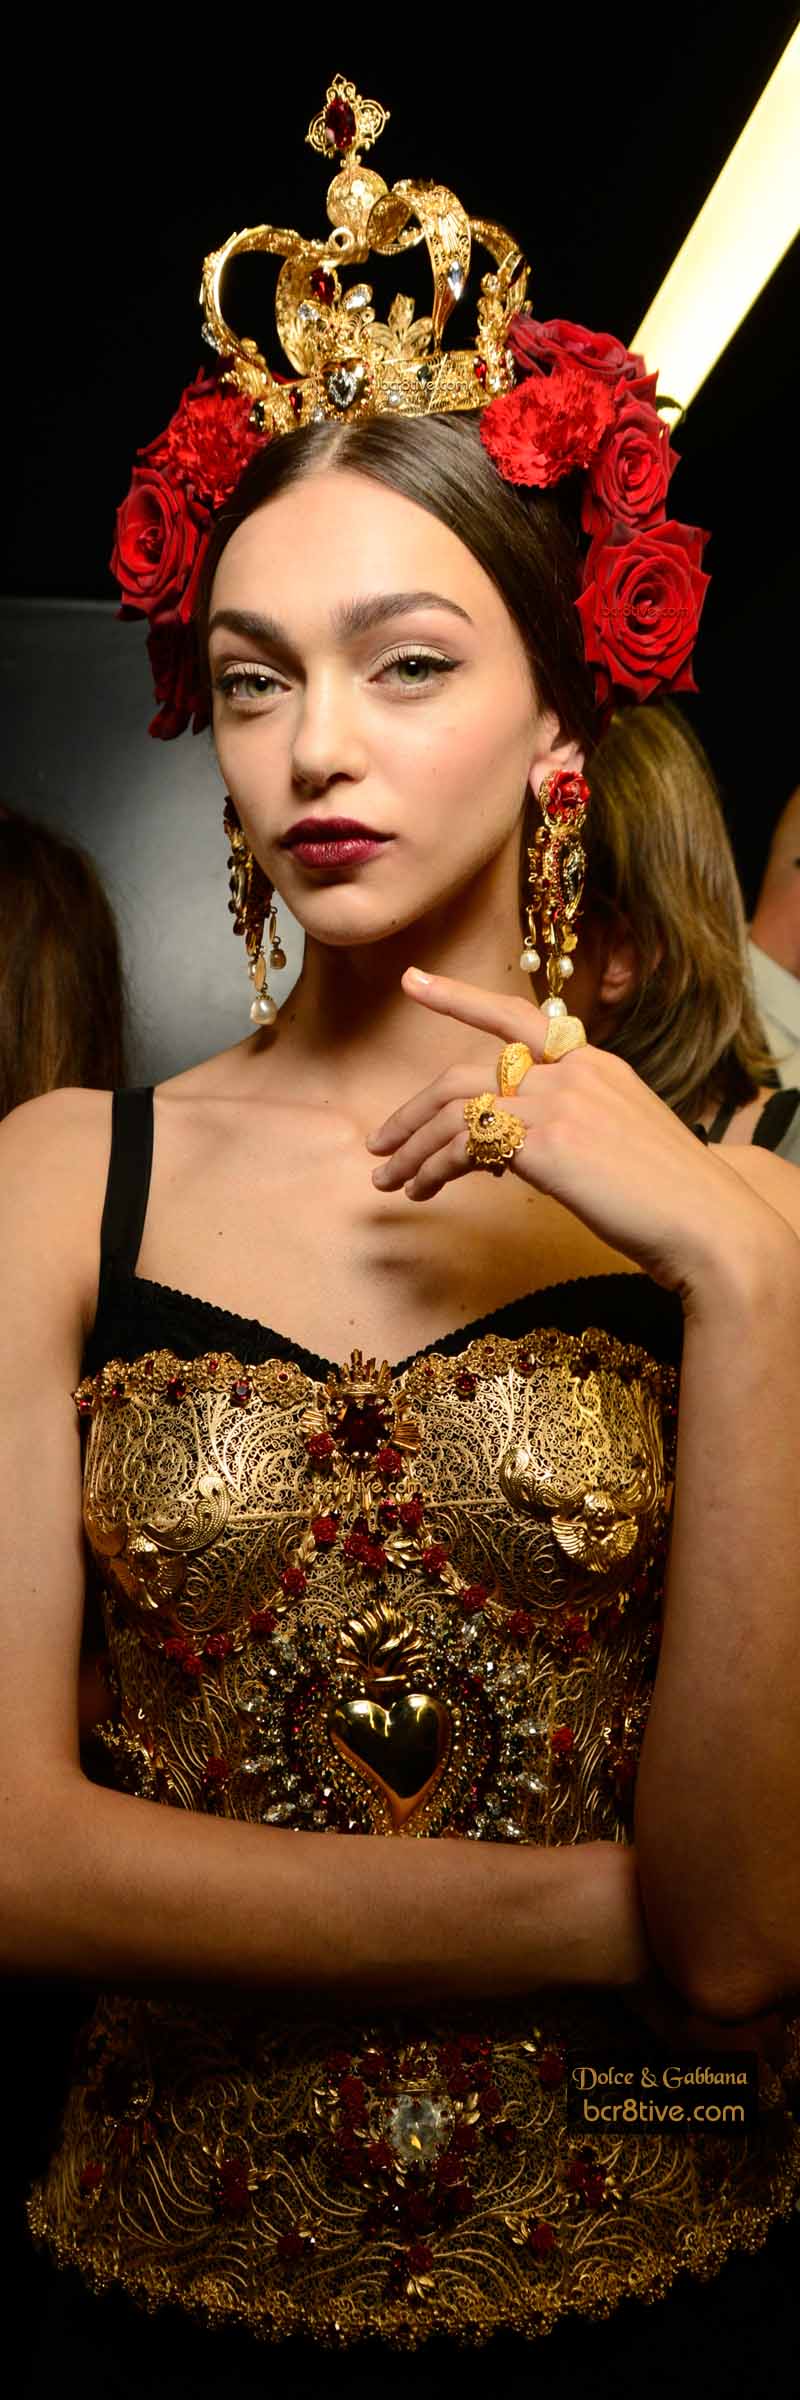 Dolce & Gabbana Spring 2015